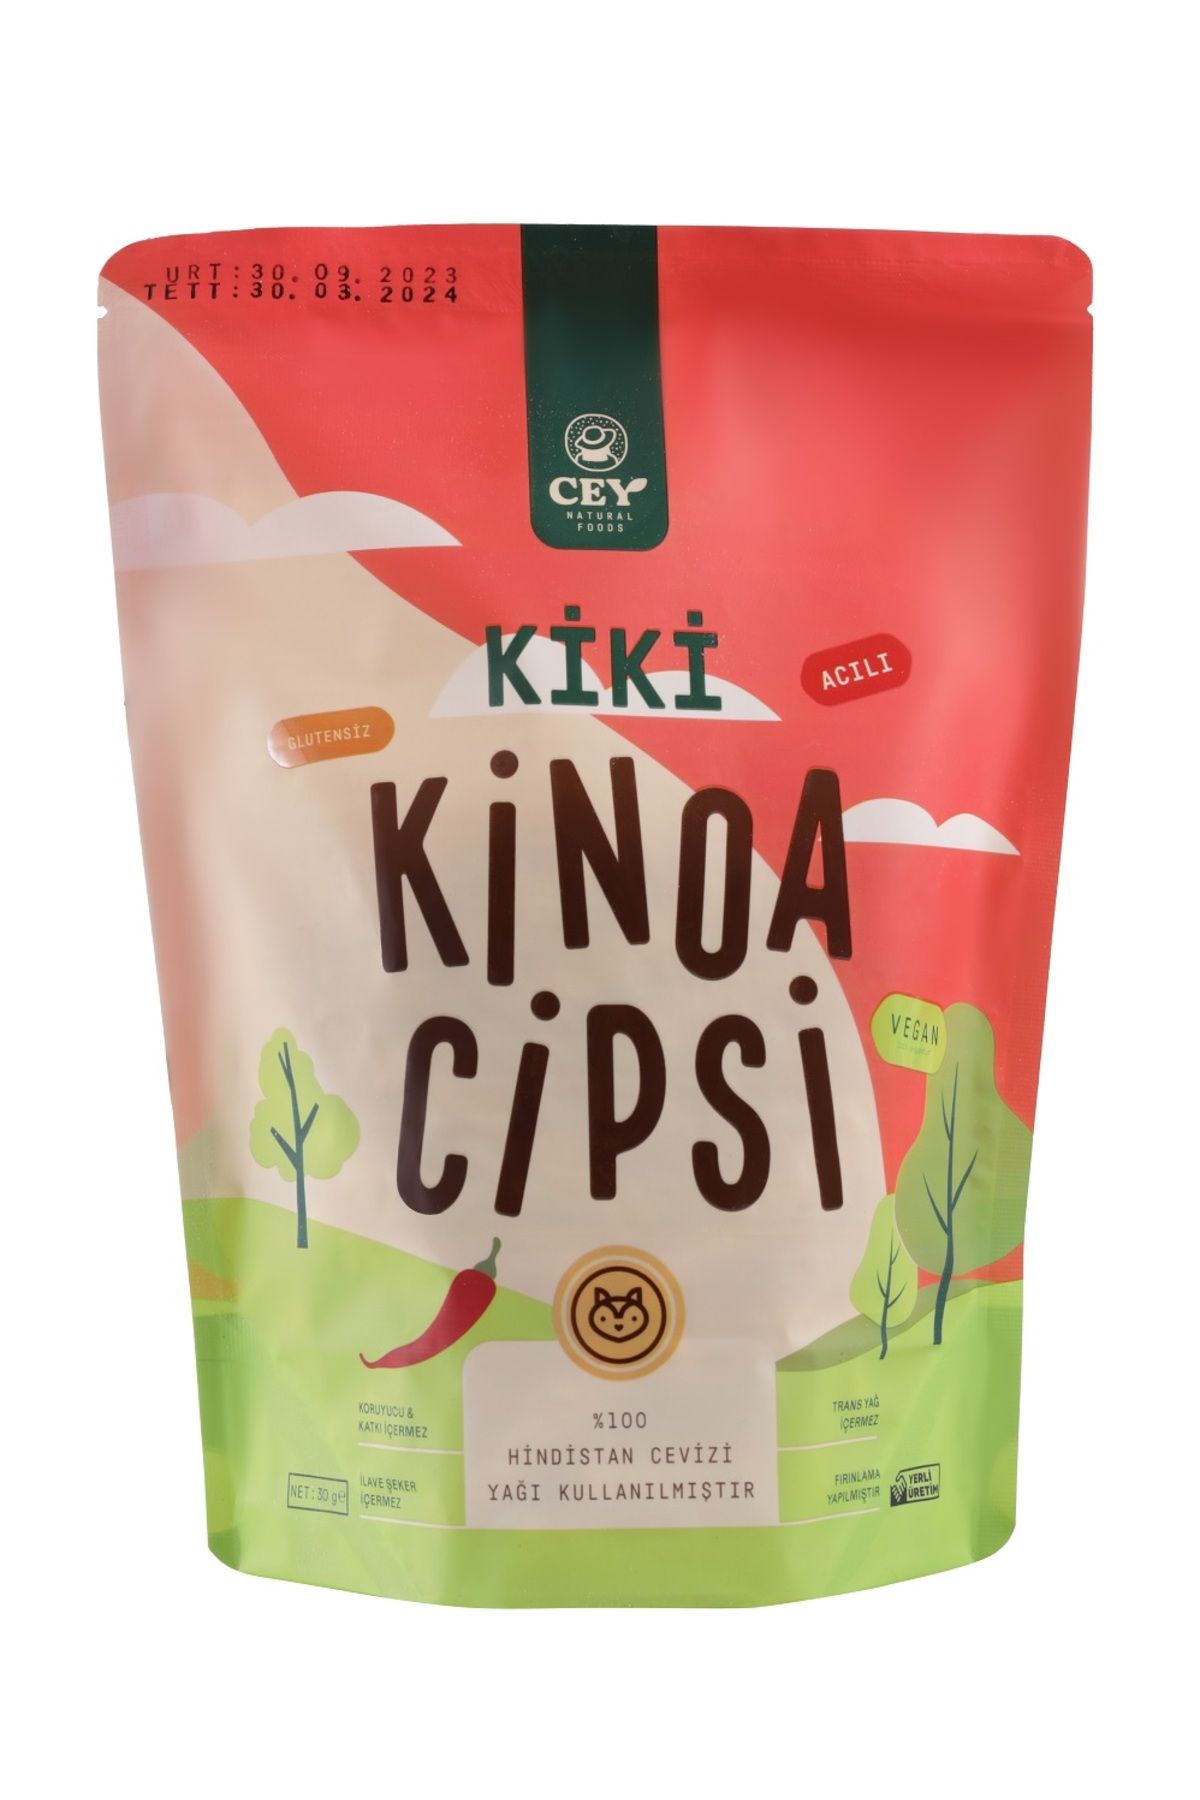 Cey Natural Foods Kiki Acılı Kinoa Cipsi 30 g